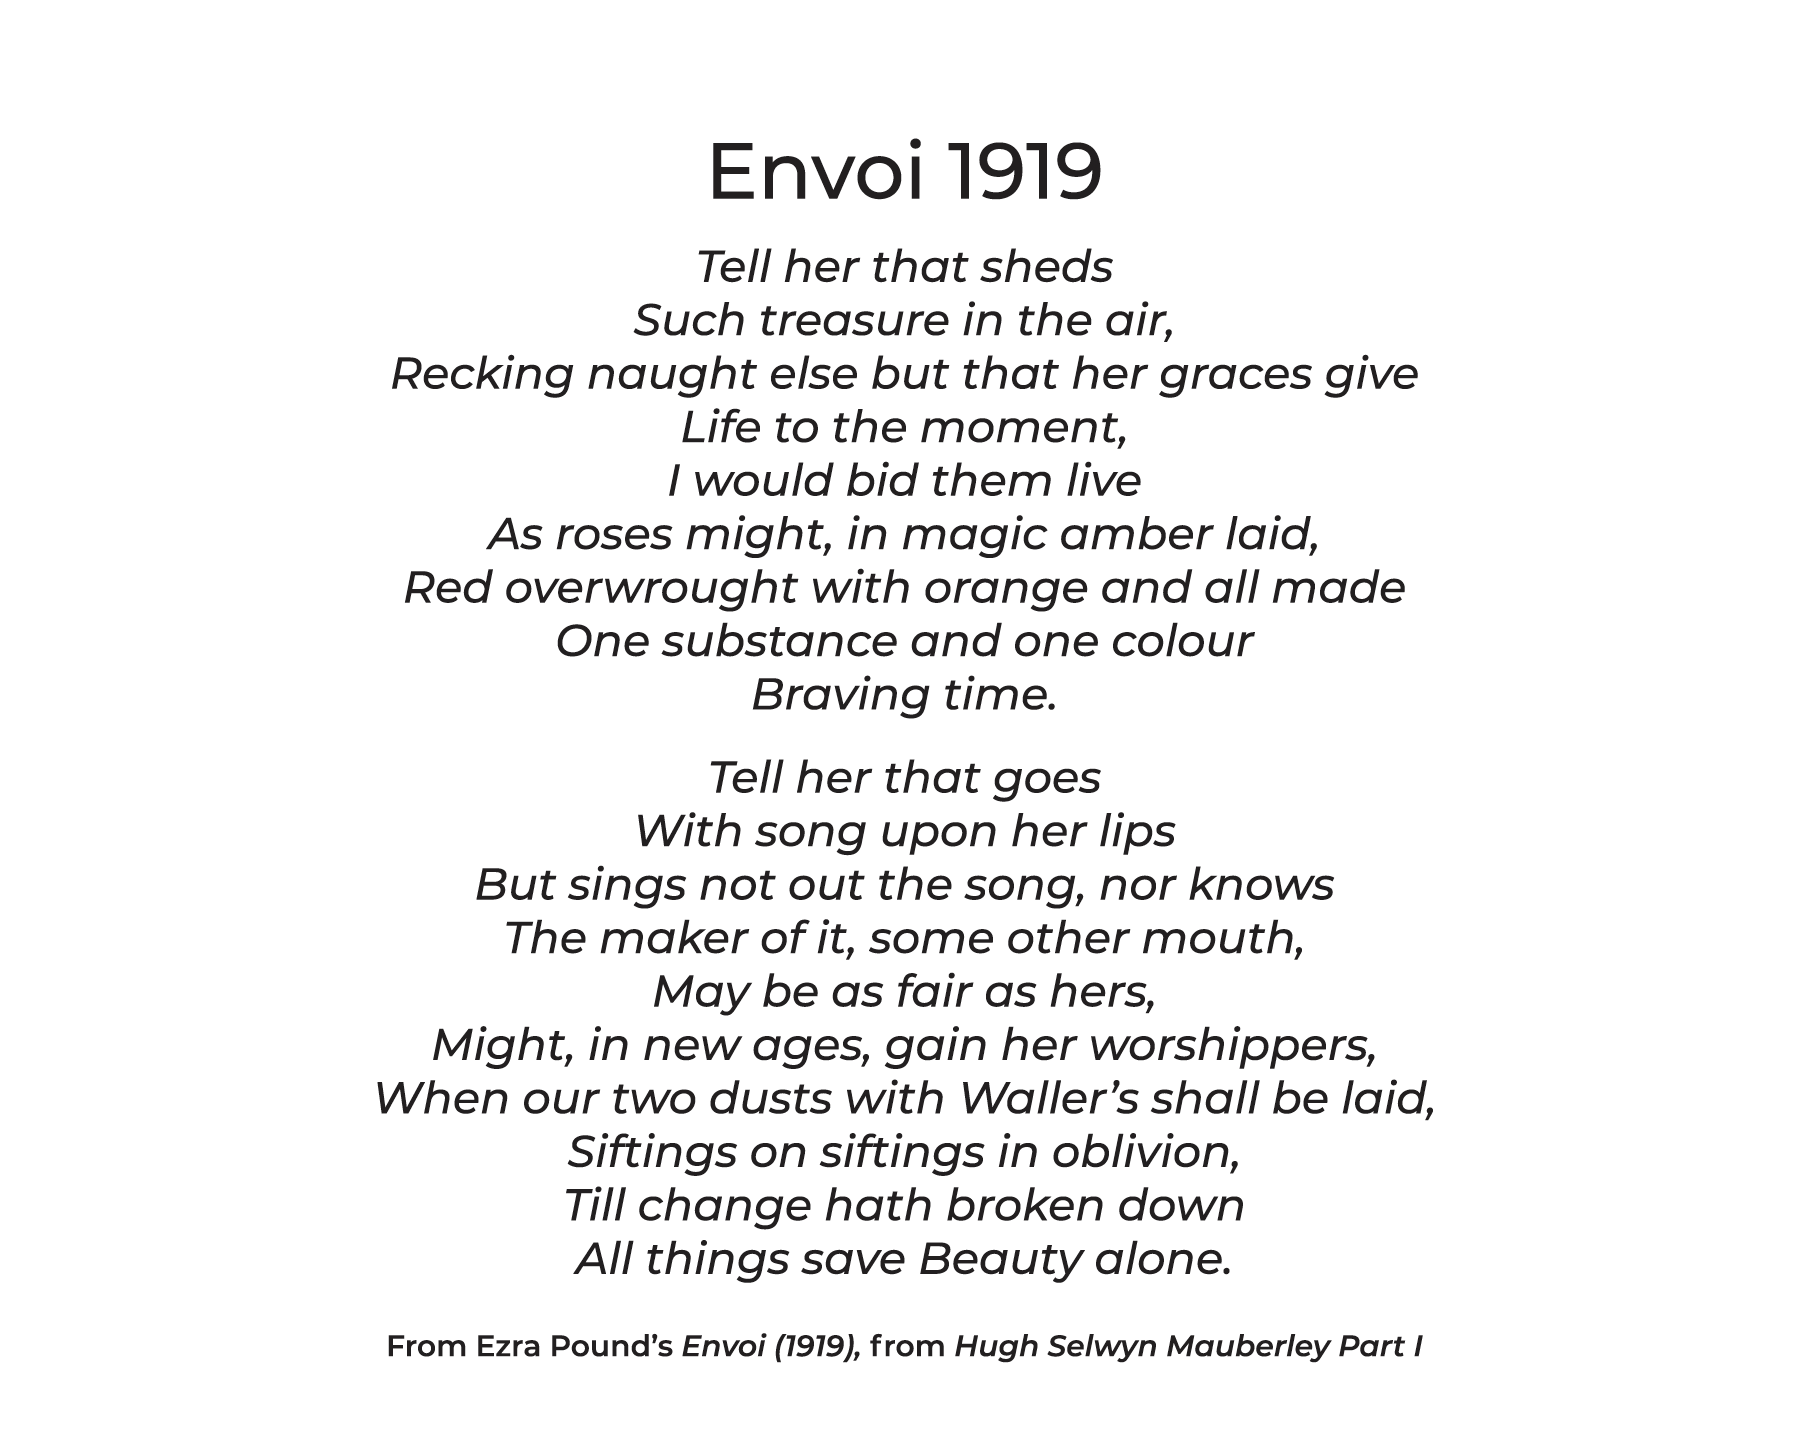 Wall text of Ezra Pound, <em>Envoi</em>, 1919, poem extract. From Erza Pound, <em>Hugh Selwyn Mauberley Part 1</em>, 1919. Image: NAS Galleries